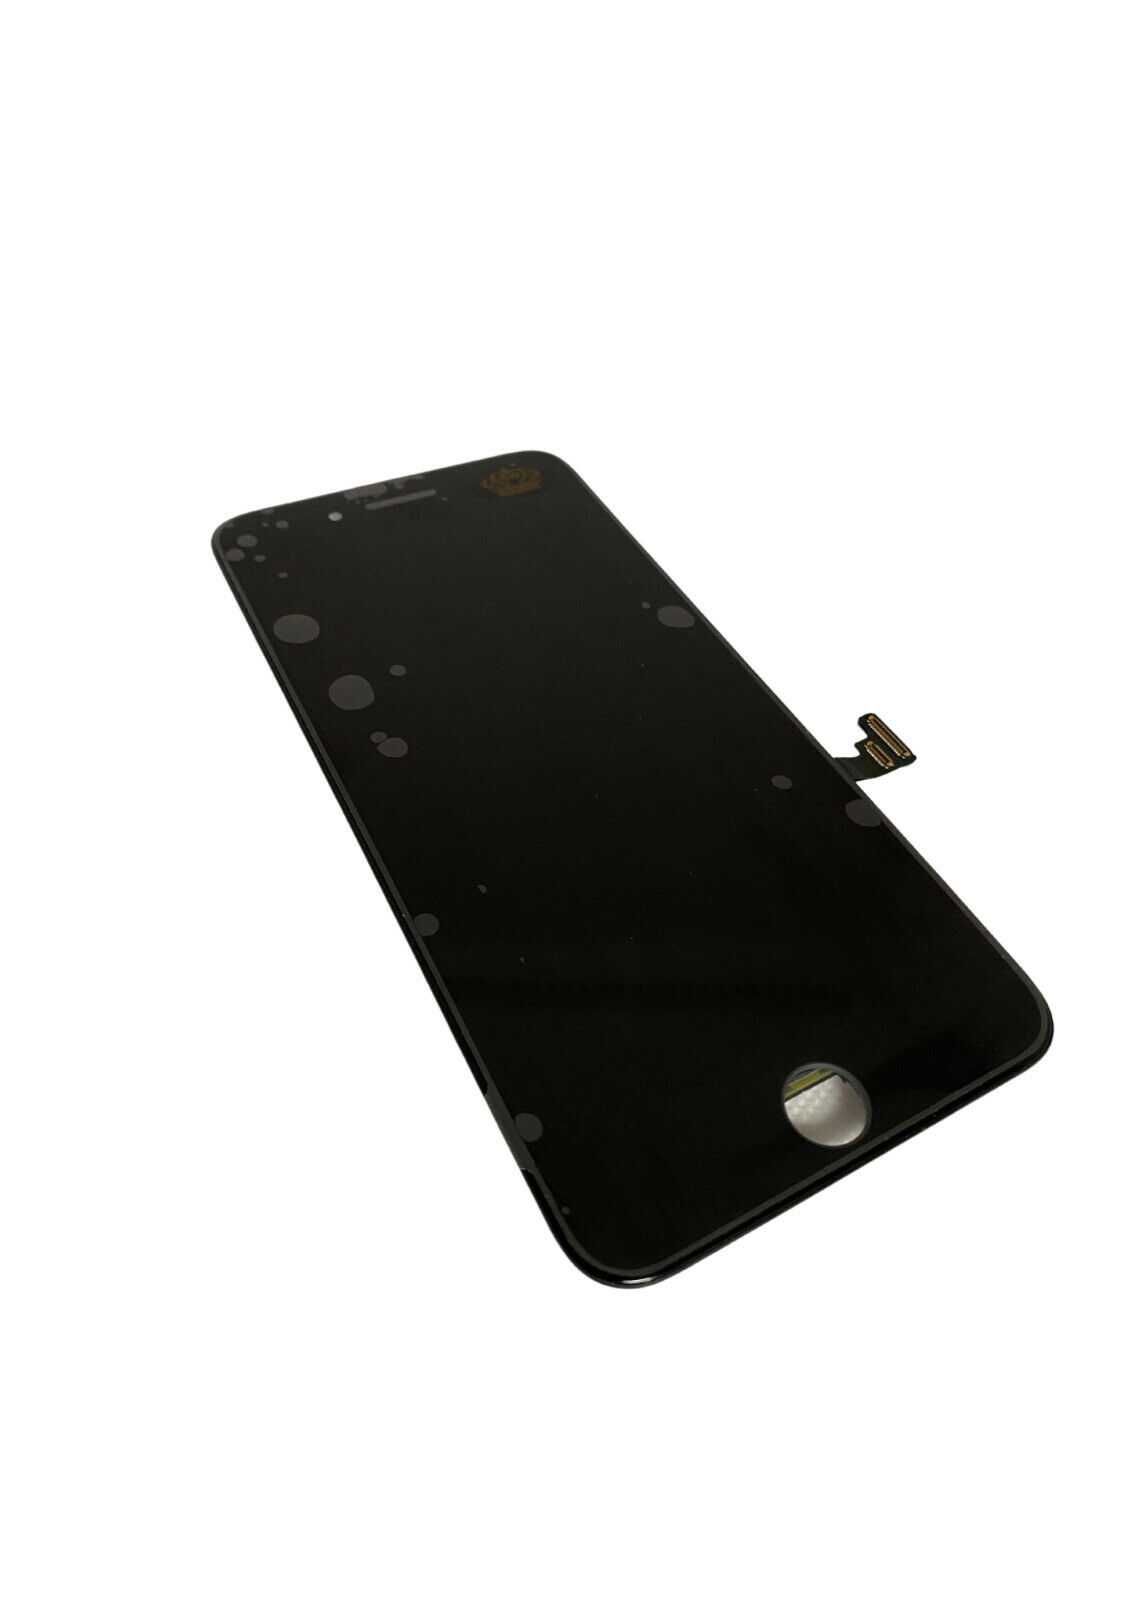  Display LCD iPhone 7 Preto NOVO + Ferramentas